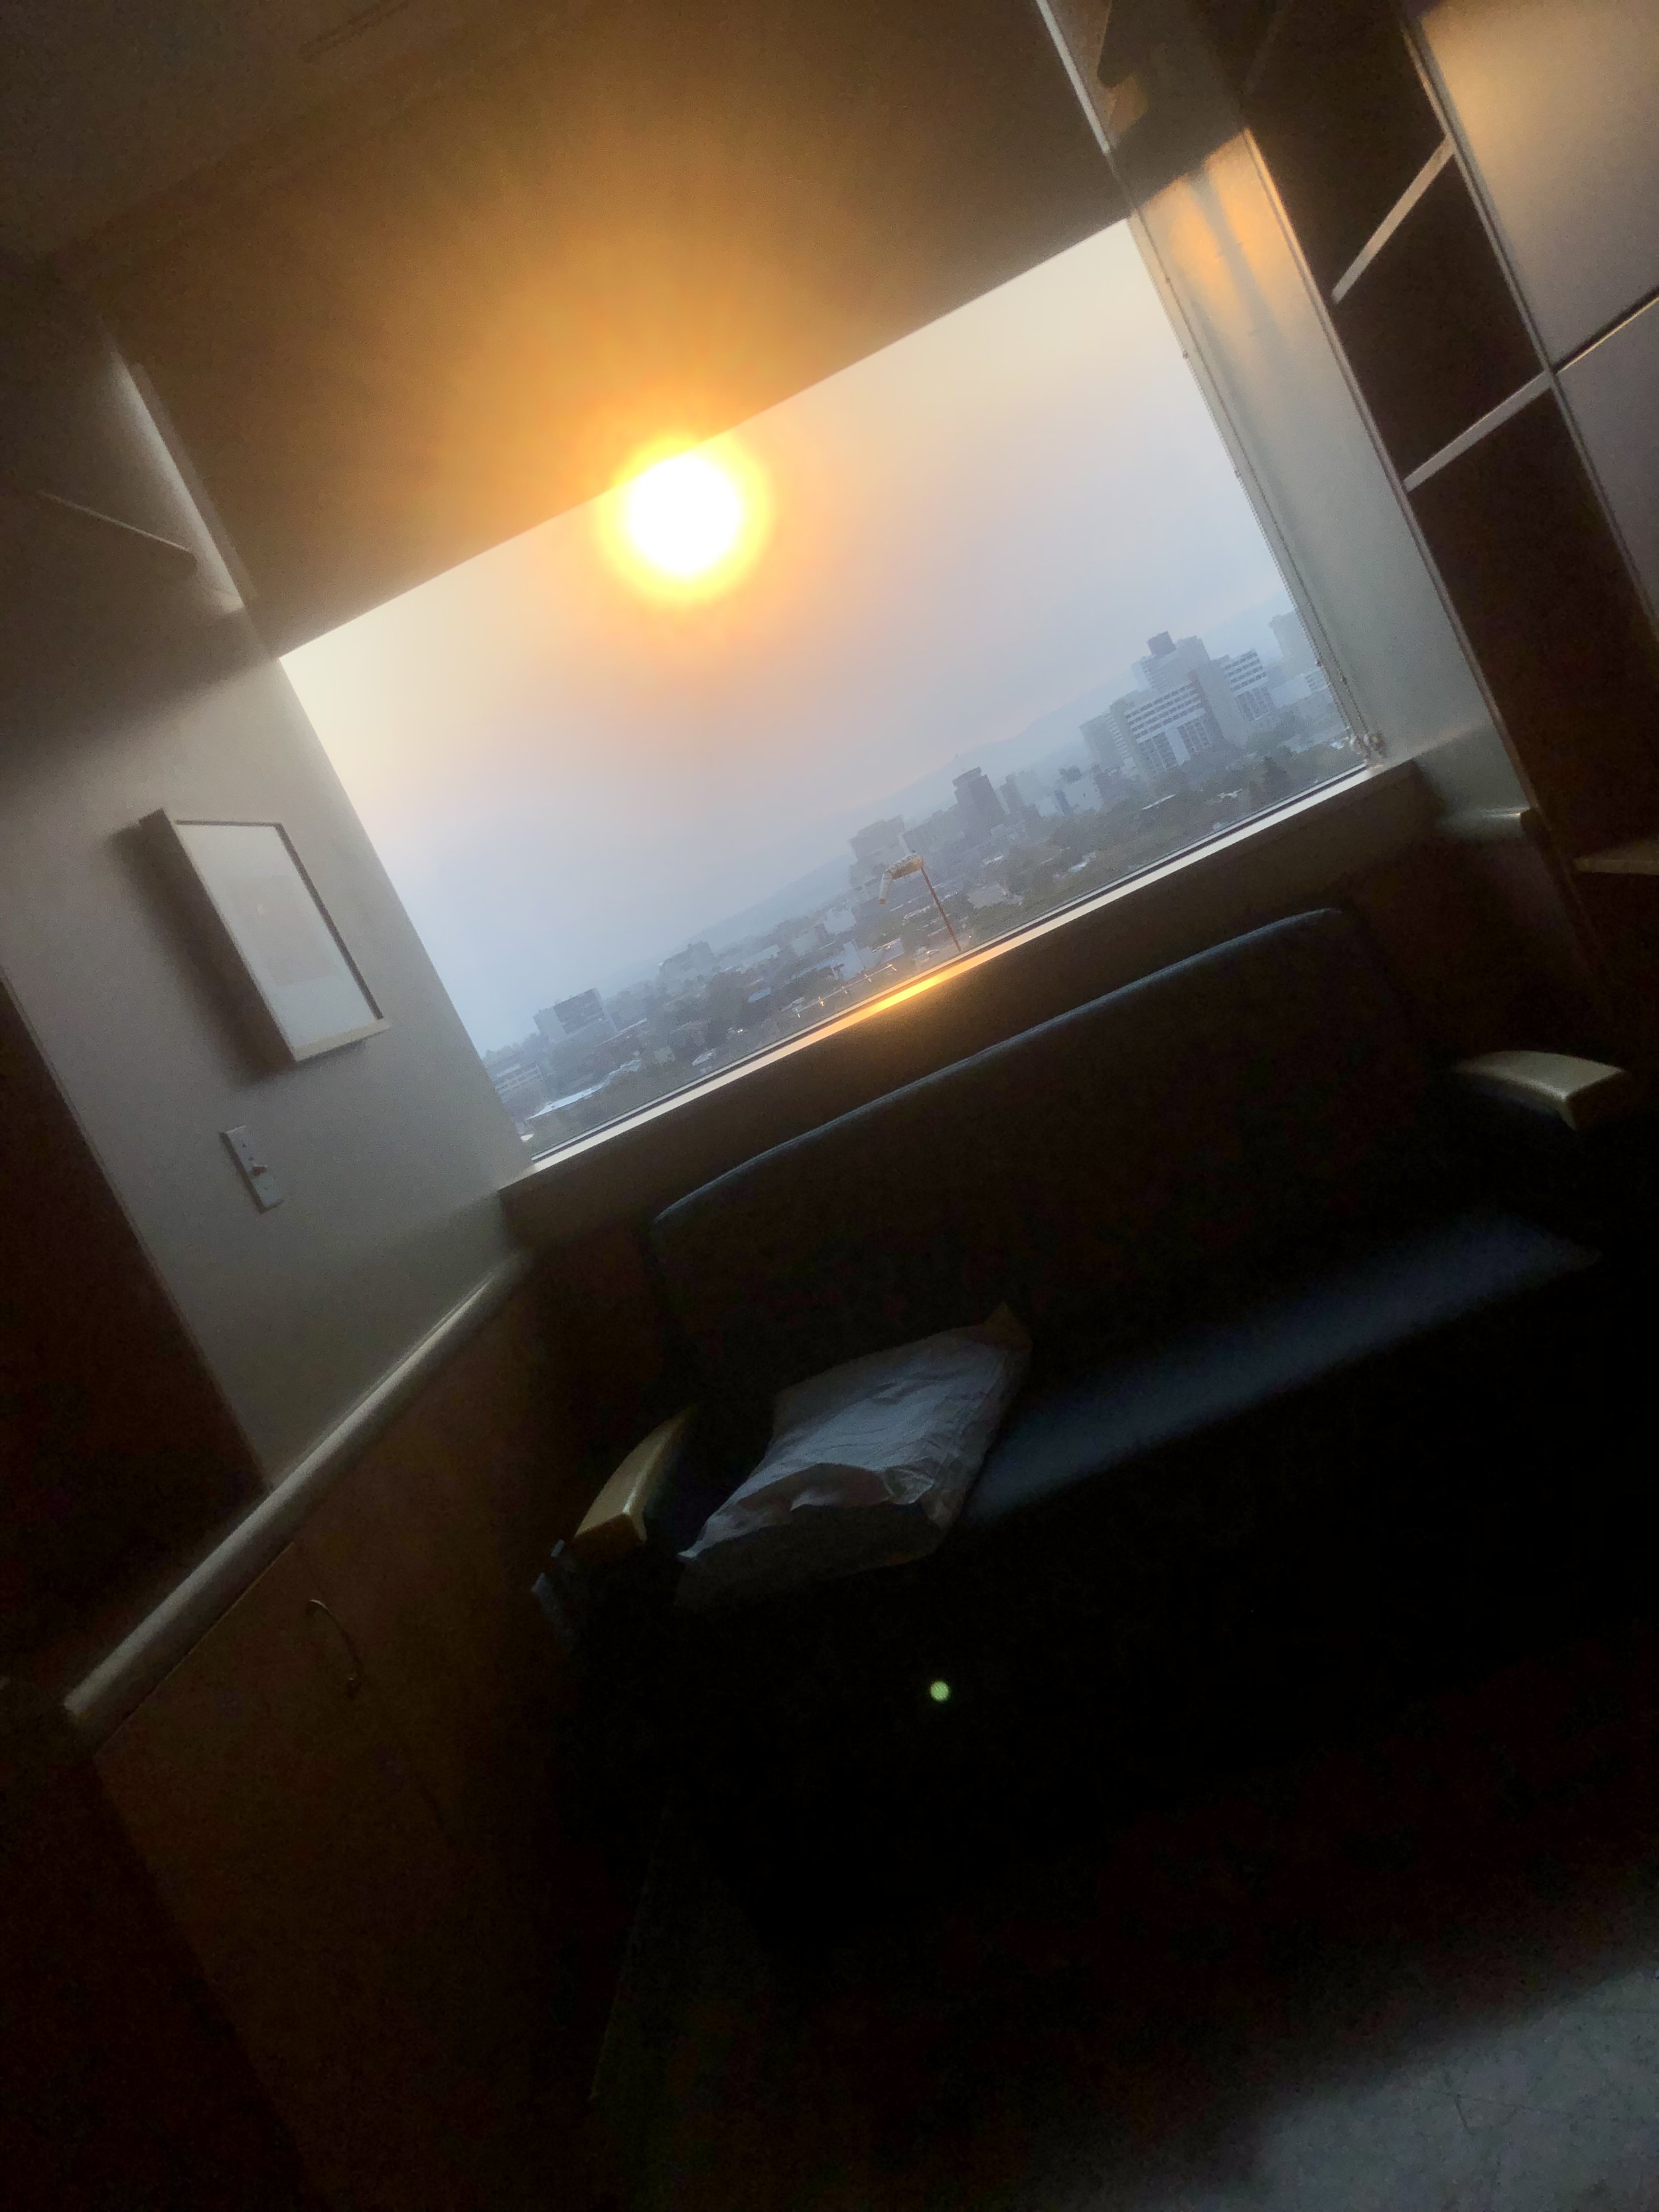 The sun rising outside my hospital window